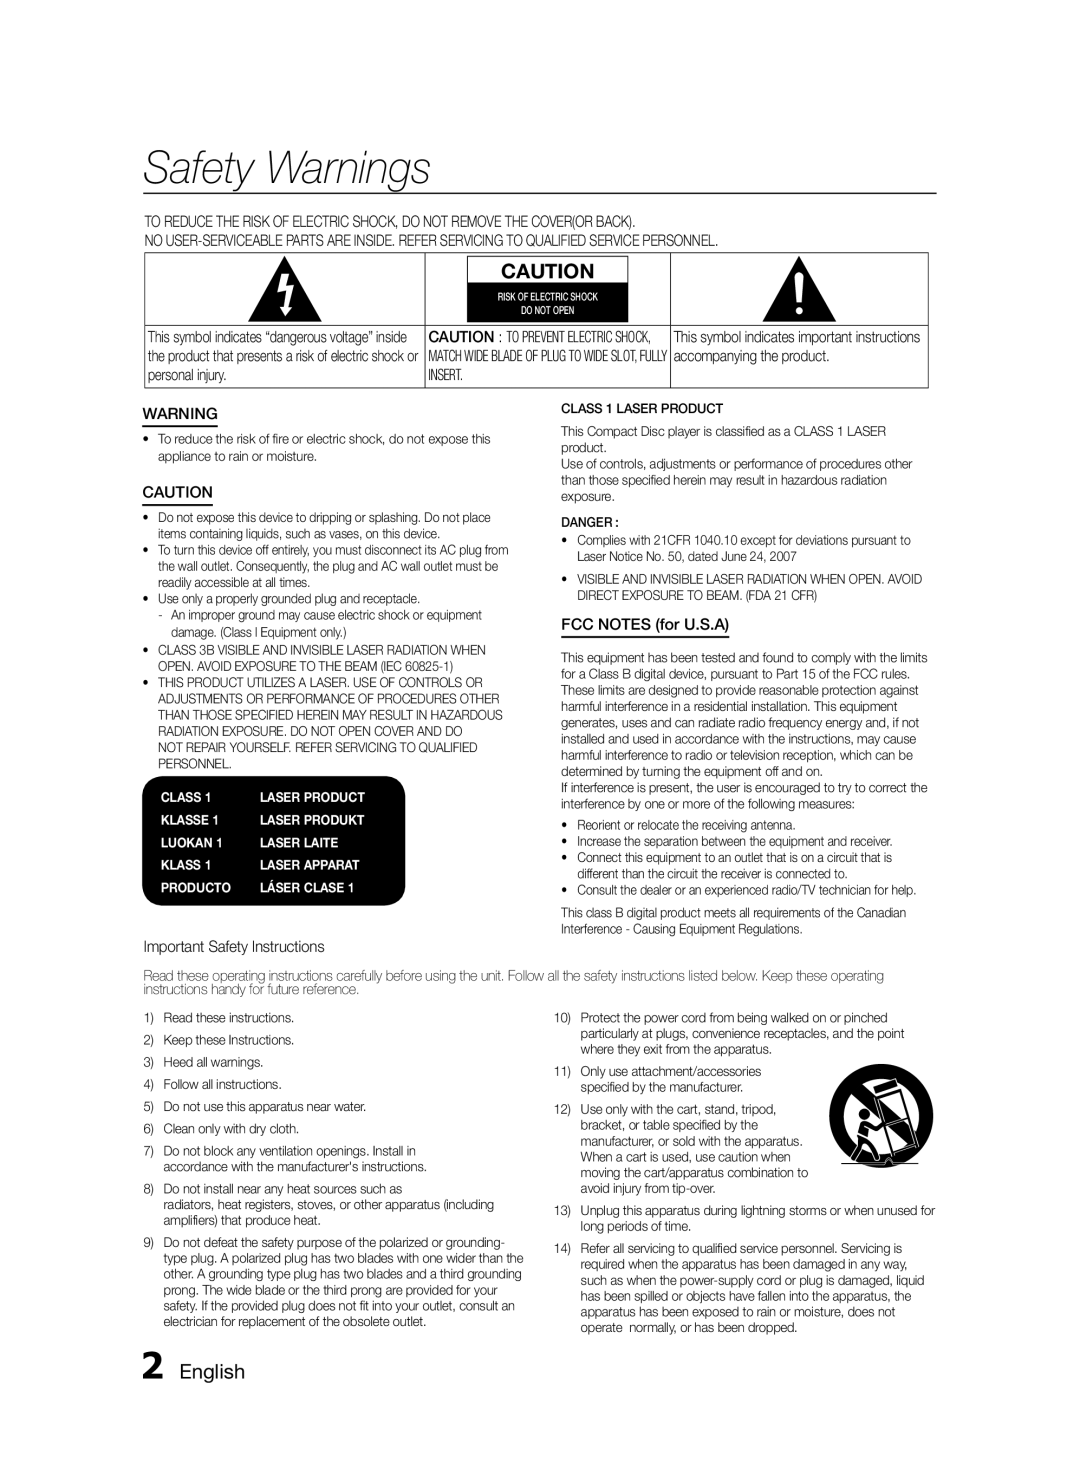 Samsung MXFS8000ZA Safety Warnings, English, Class, Laser Product, Klasse, Laser Produkt, Luokan, Laser Laite, Producto 